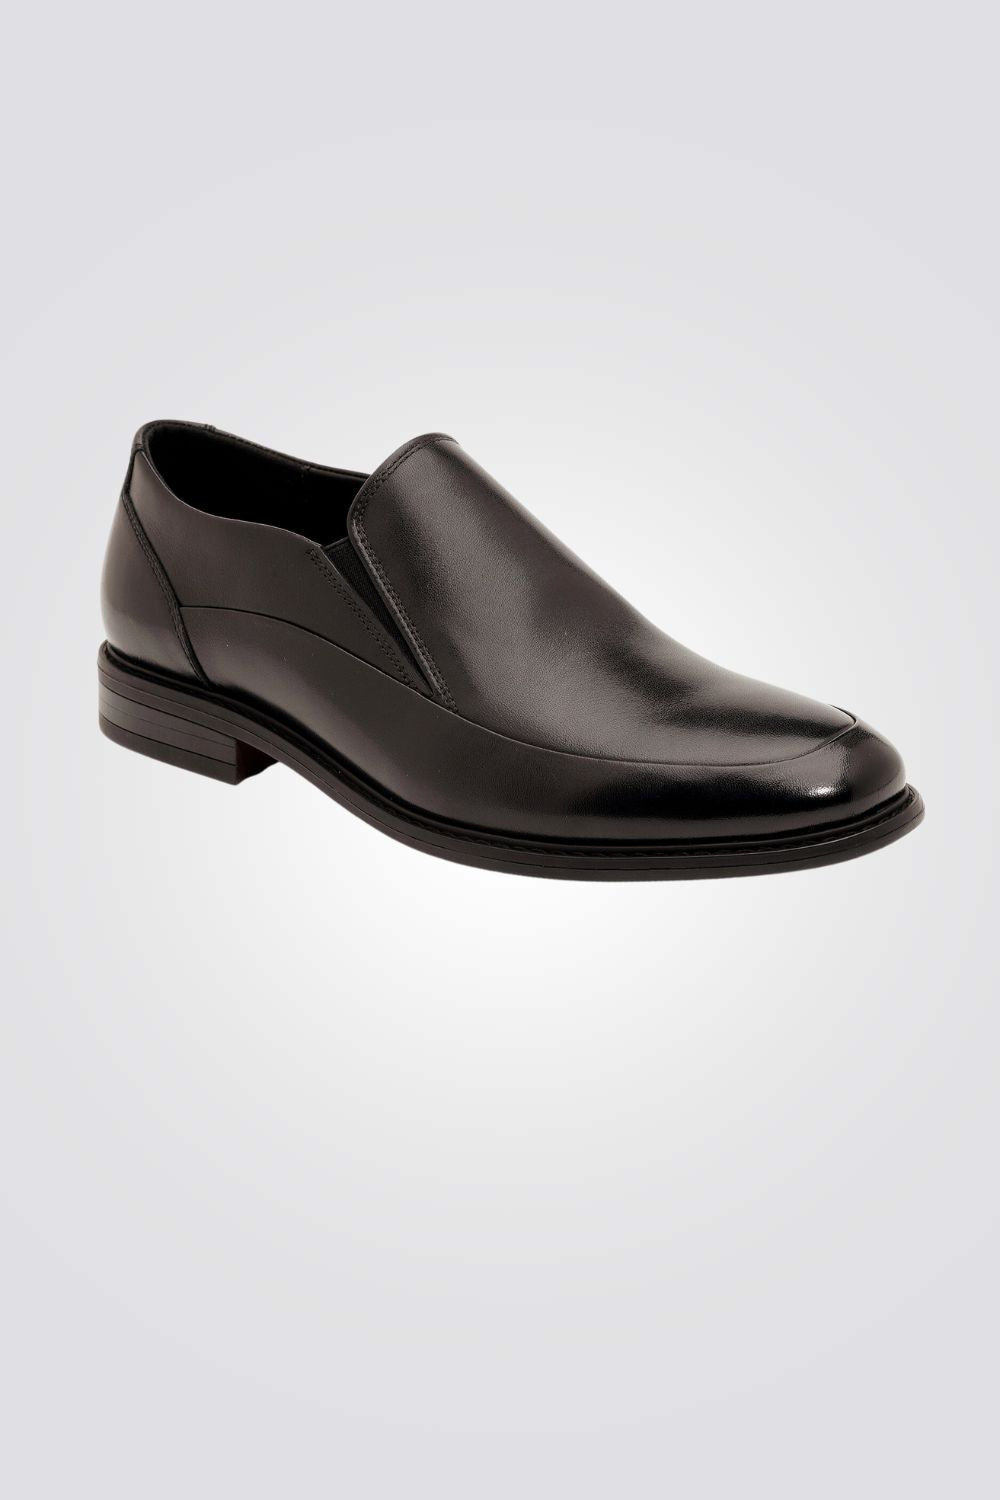 TRAK - נעל עור אלגנט צבע שחור דגם ארז - MASHBIR//365